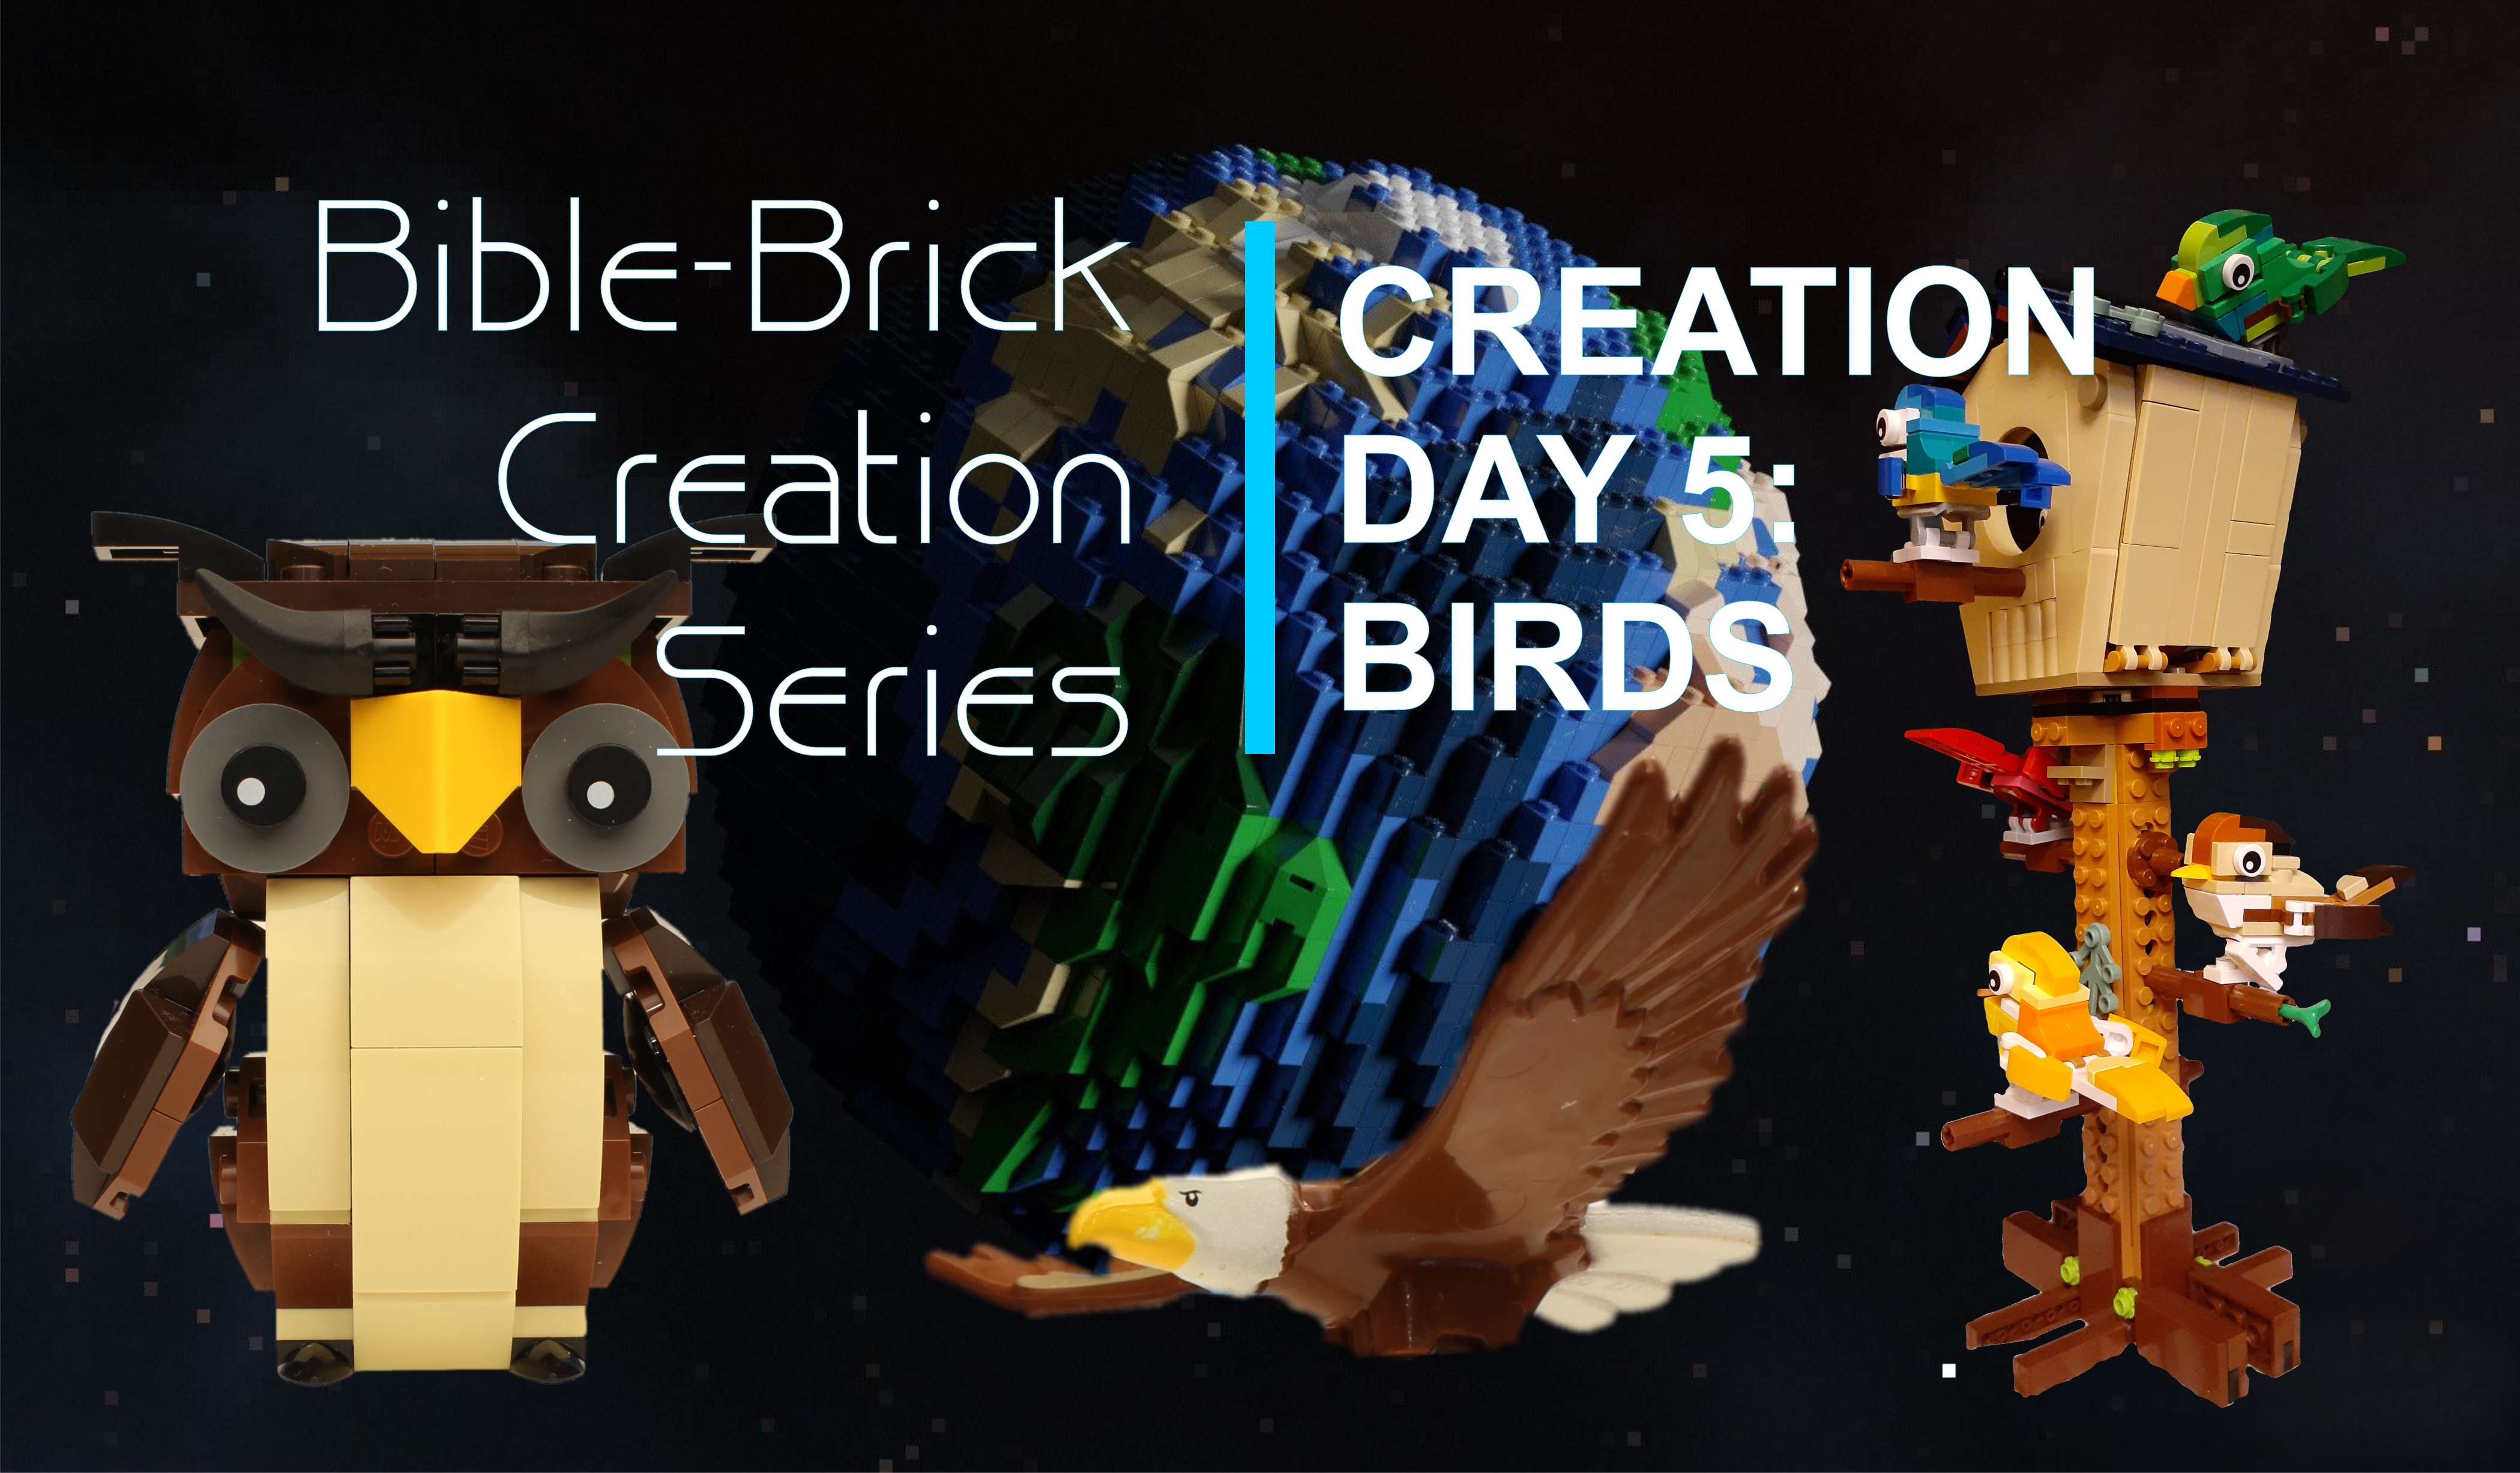 Creation #20 Day 5 Birds